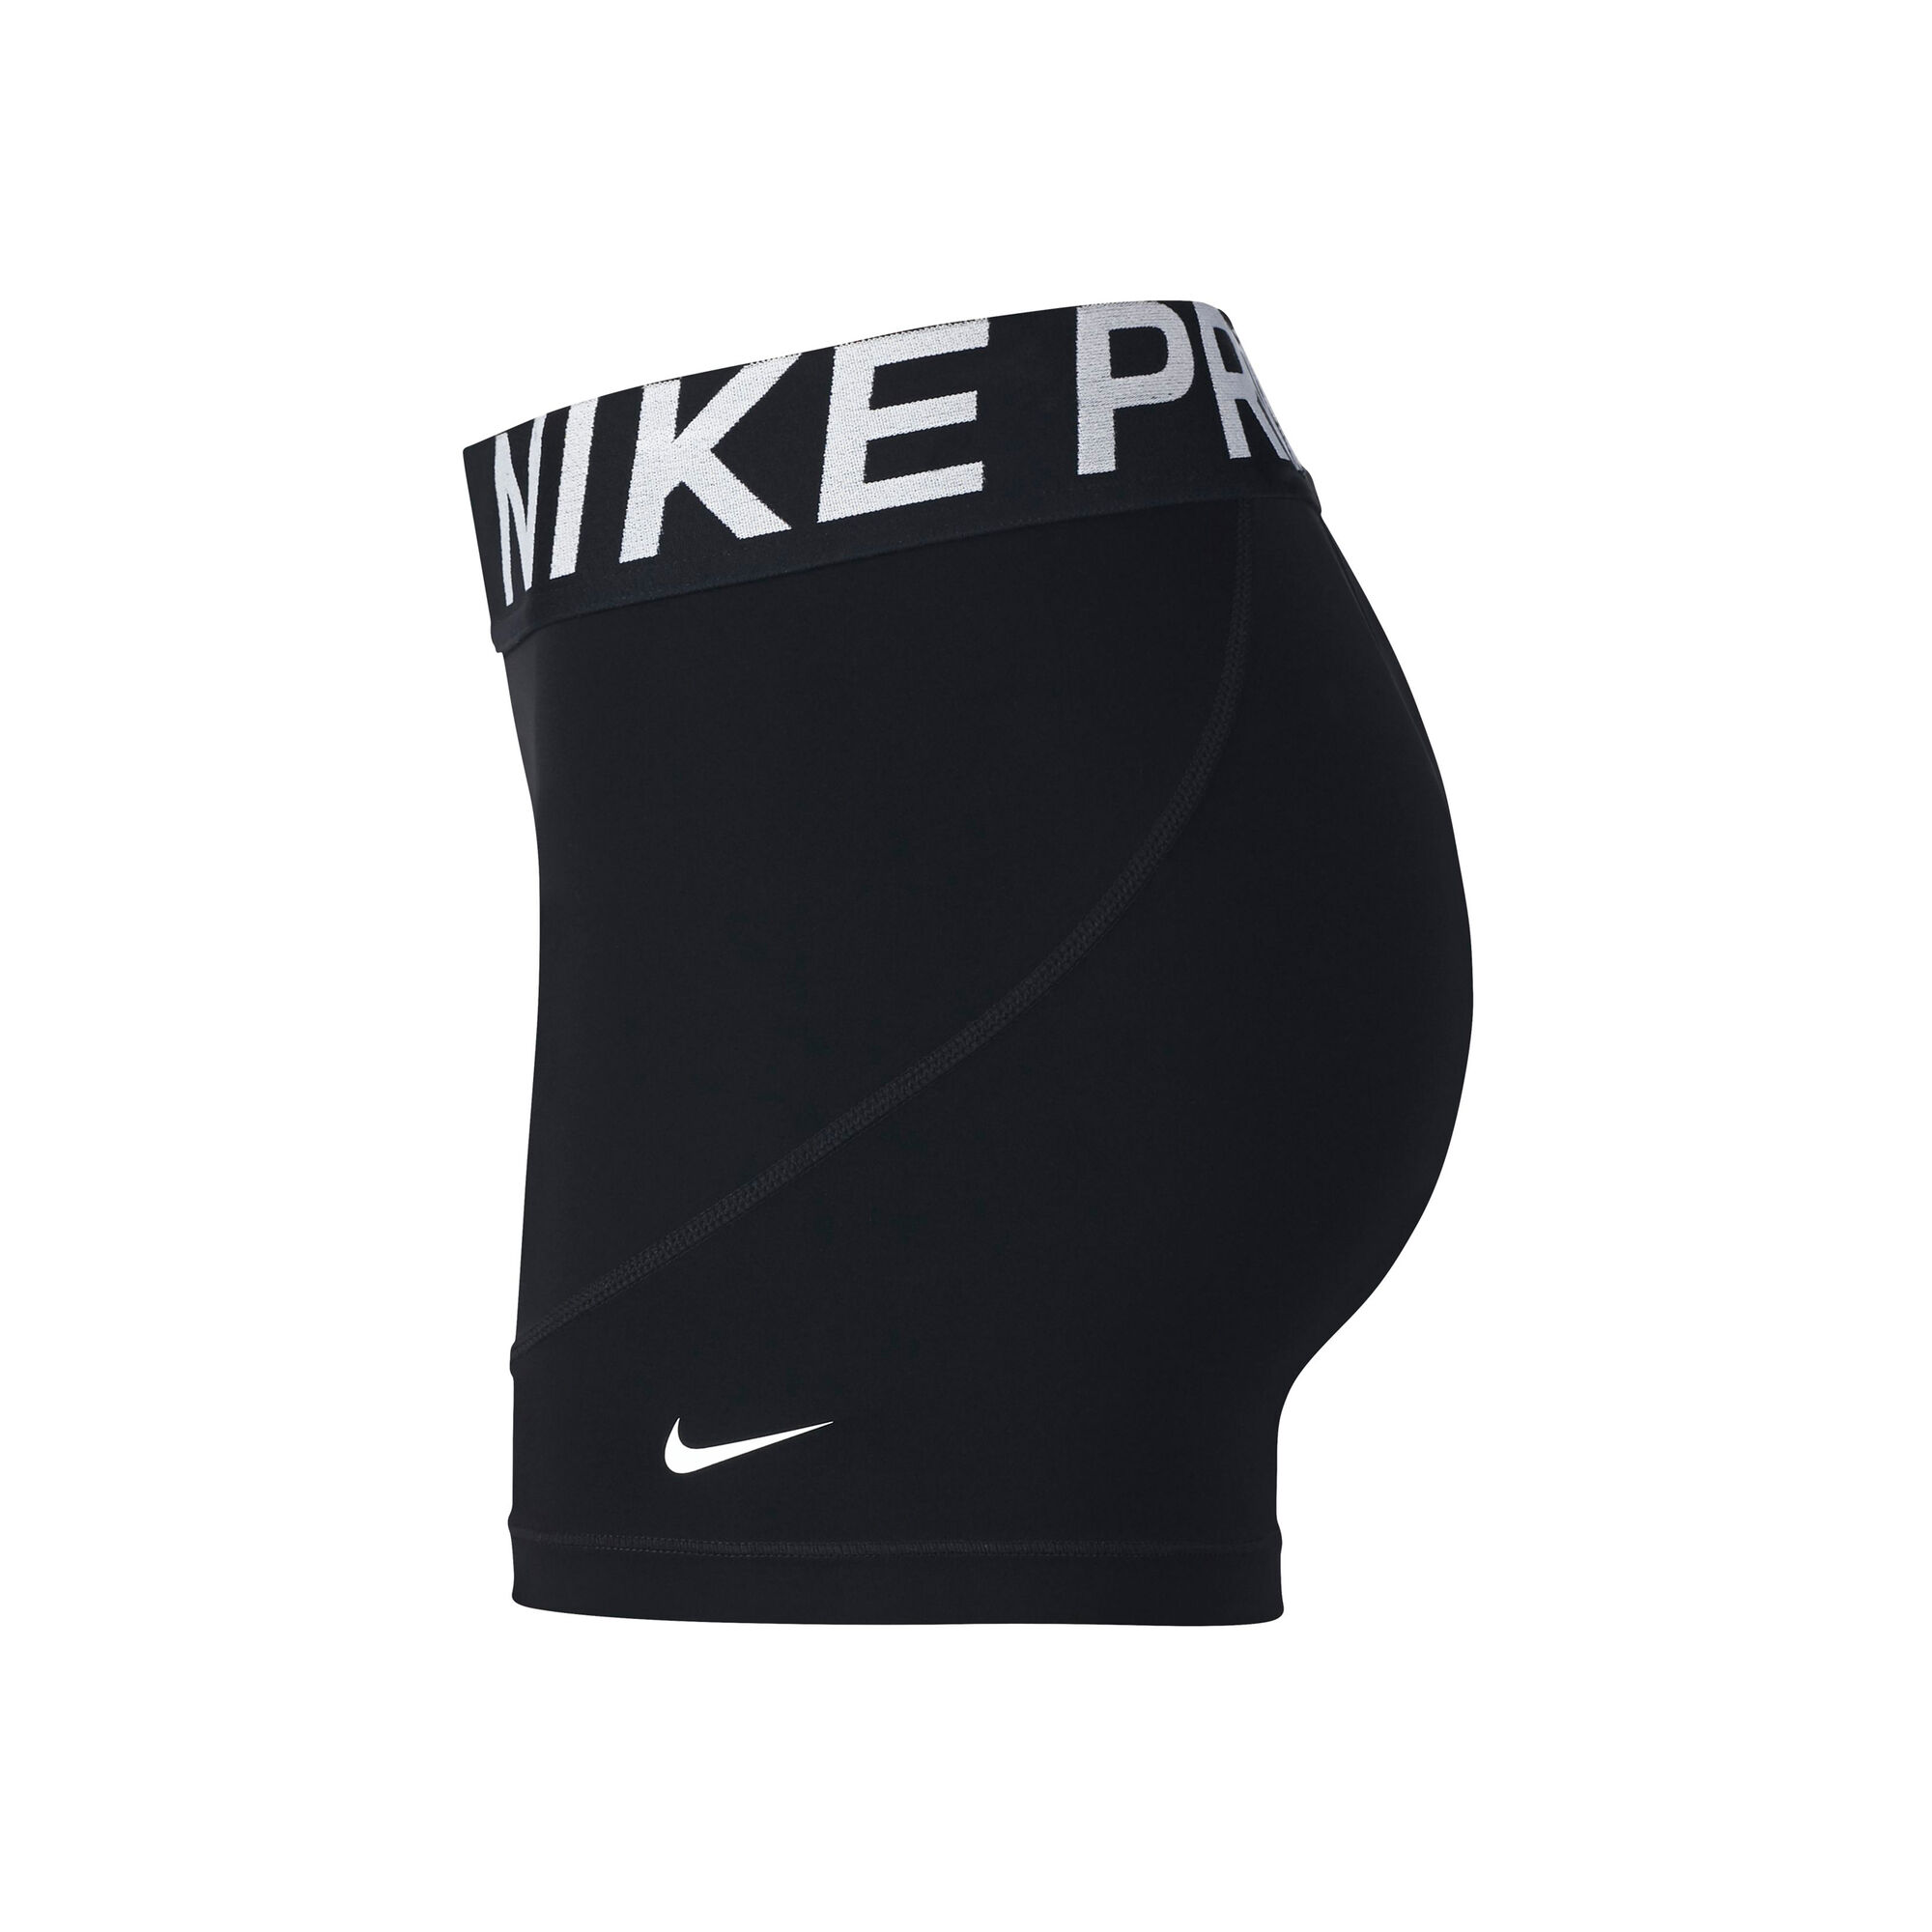 Buy Nike Pro Shorts Girls Black, White online